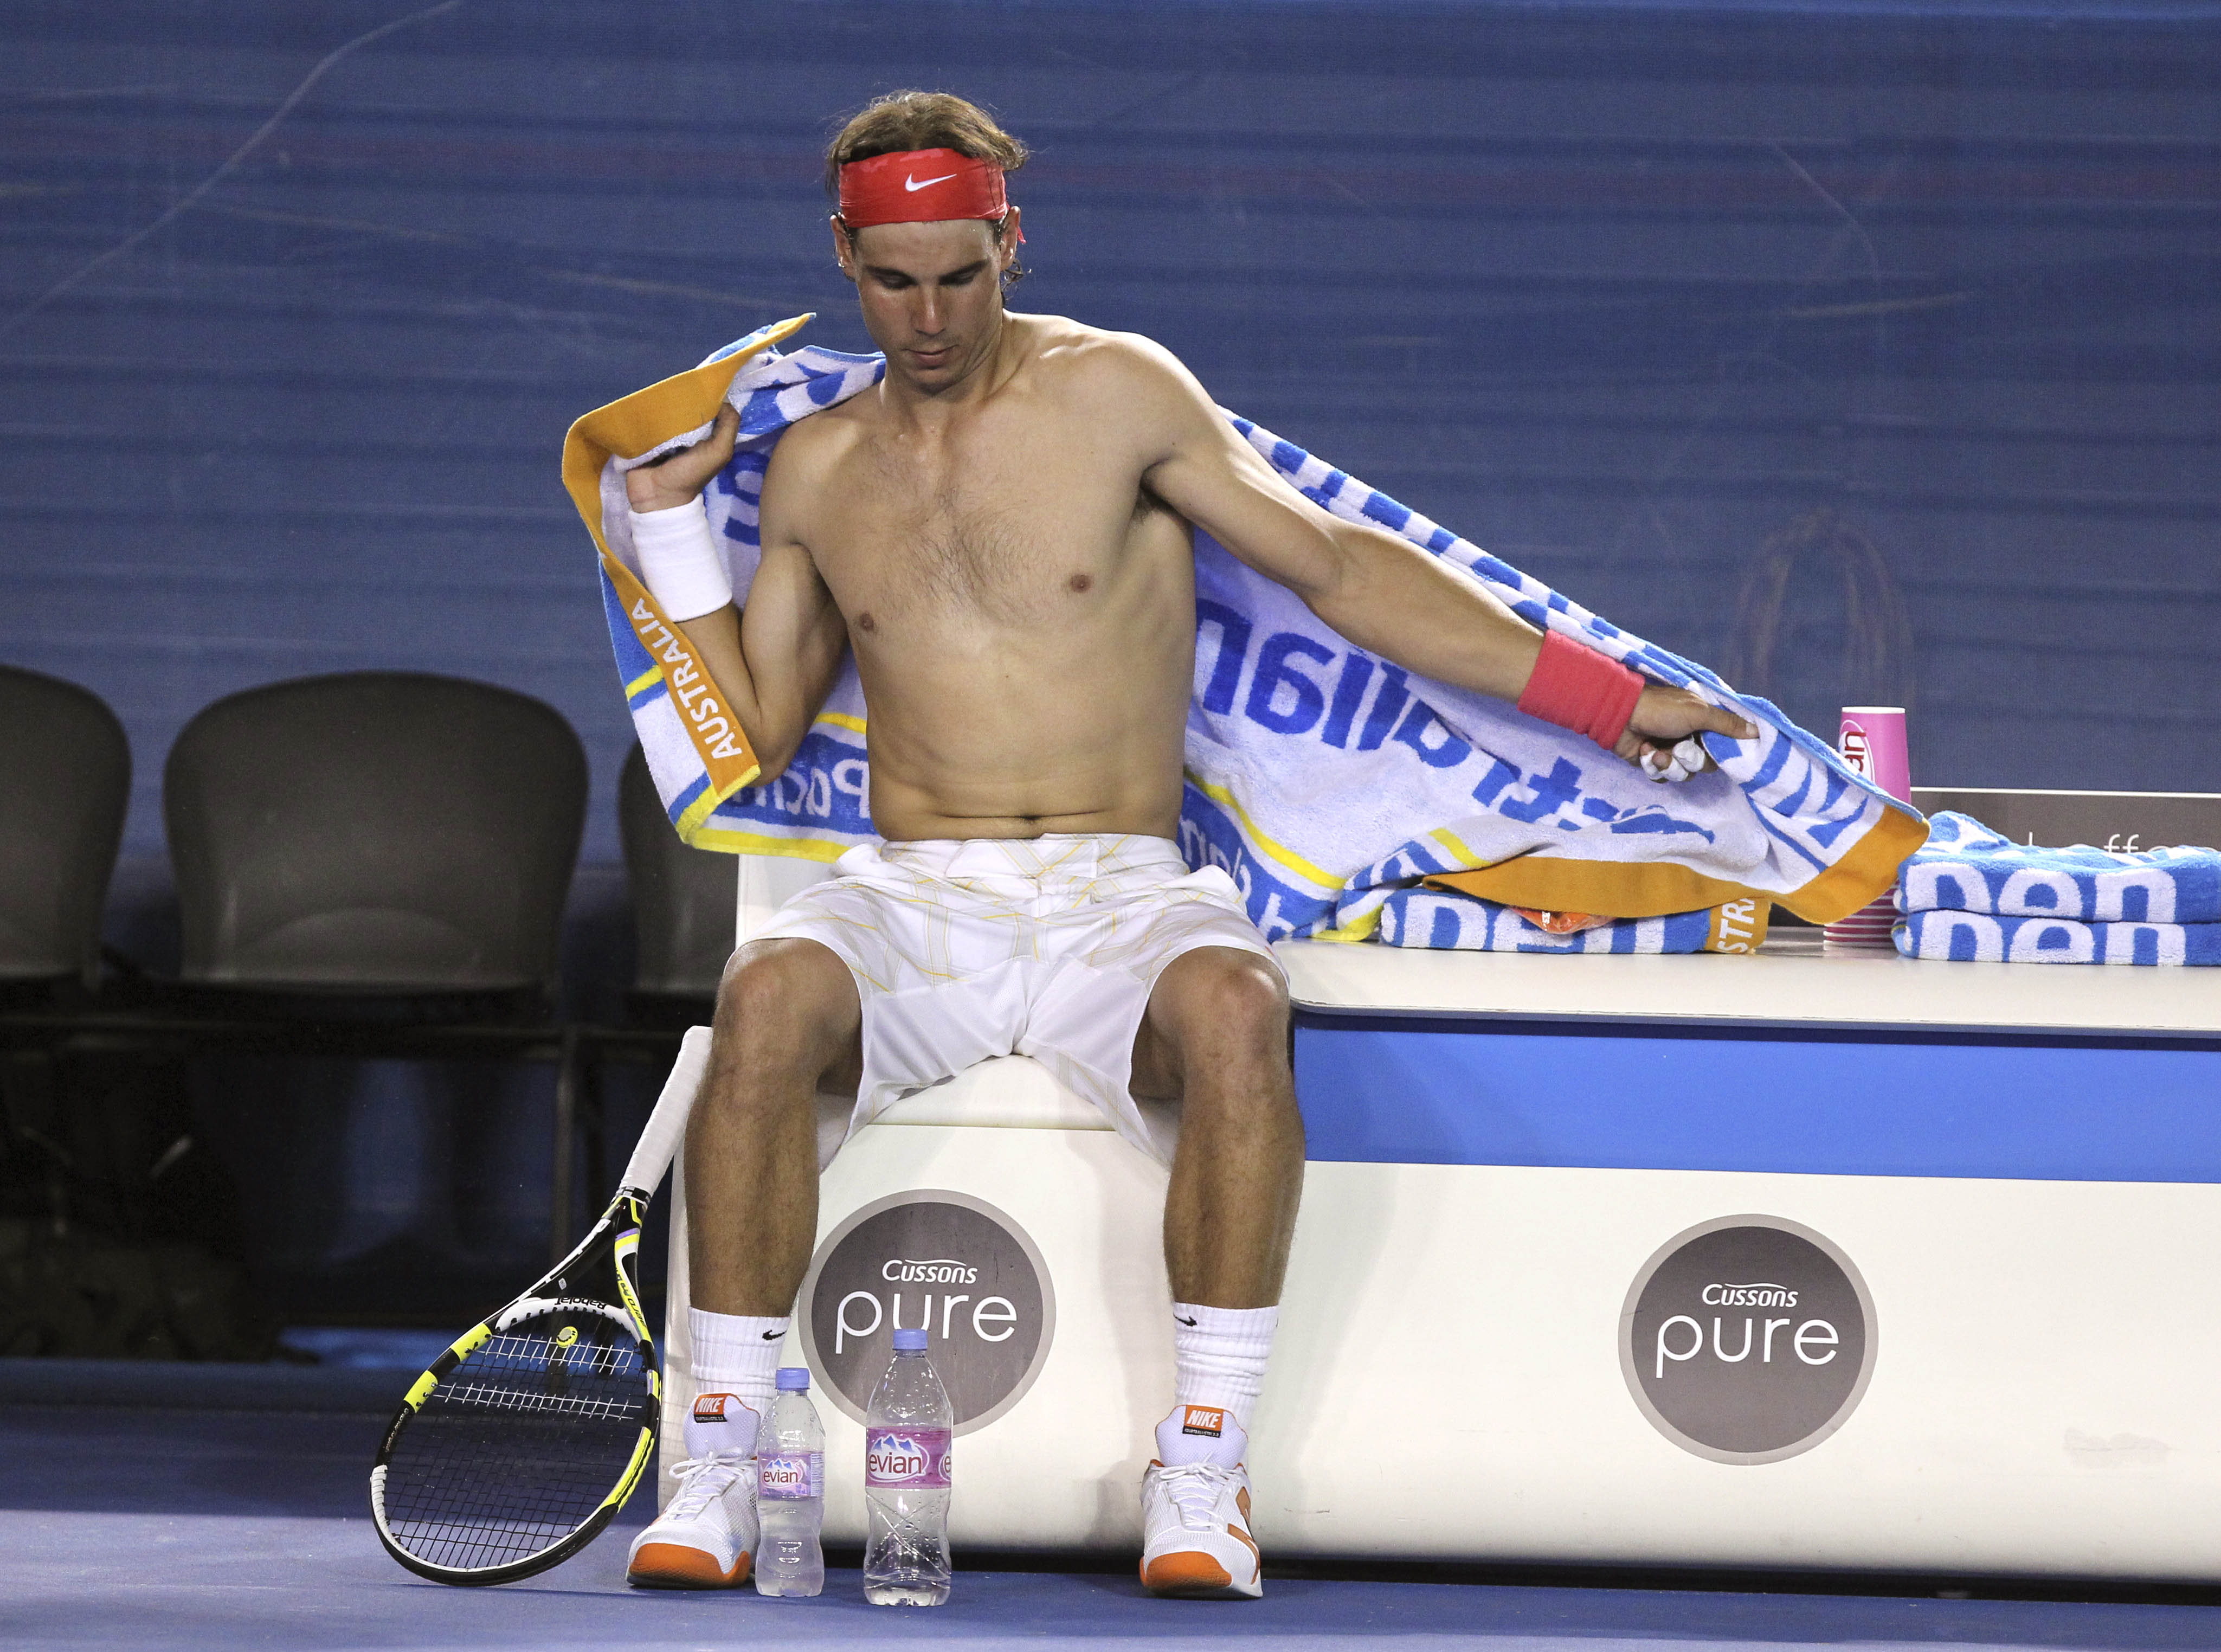 Andy Murray, Tennis, Andy Roddick, Australian Open, Juan Martin del Potro, Rafael Nadal, Roger Federer, Kim Clijsters